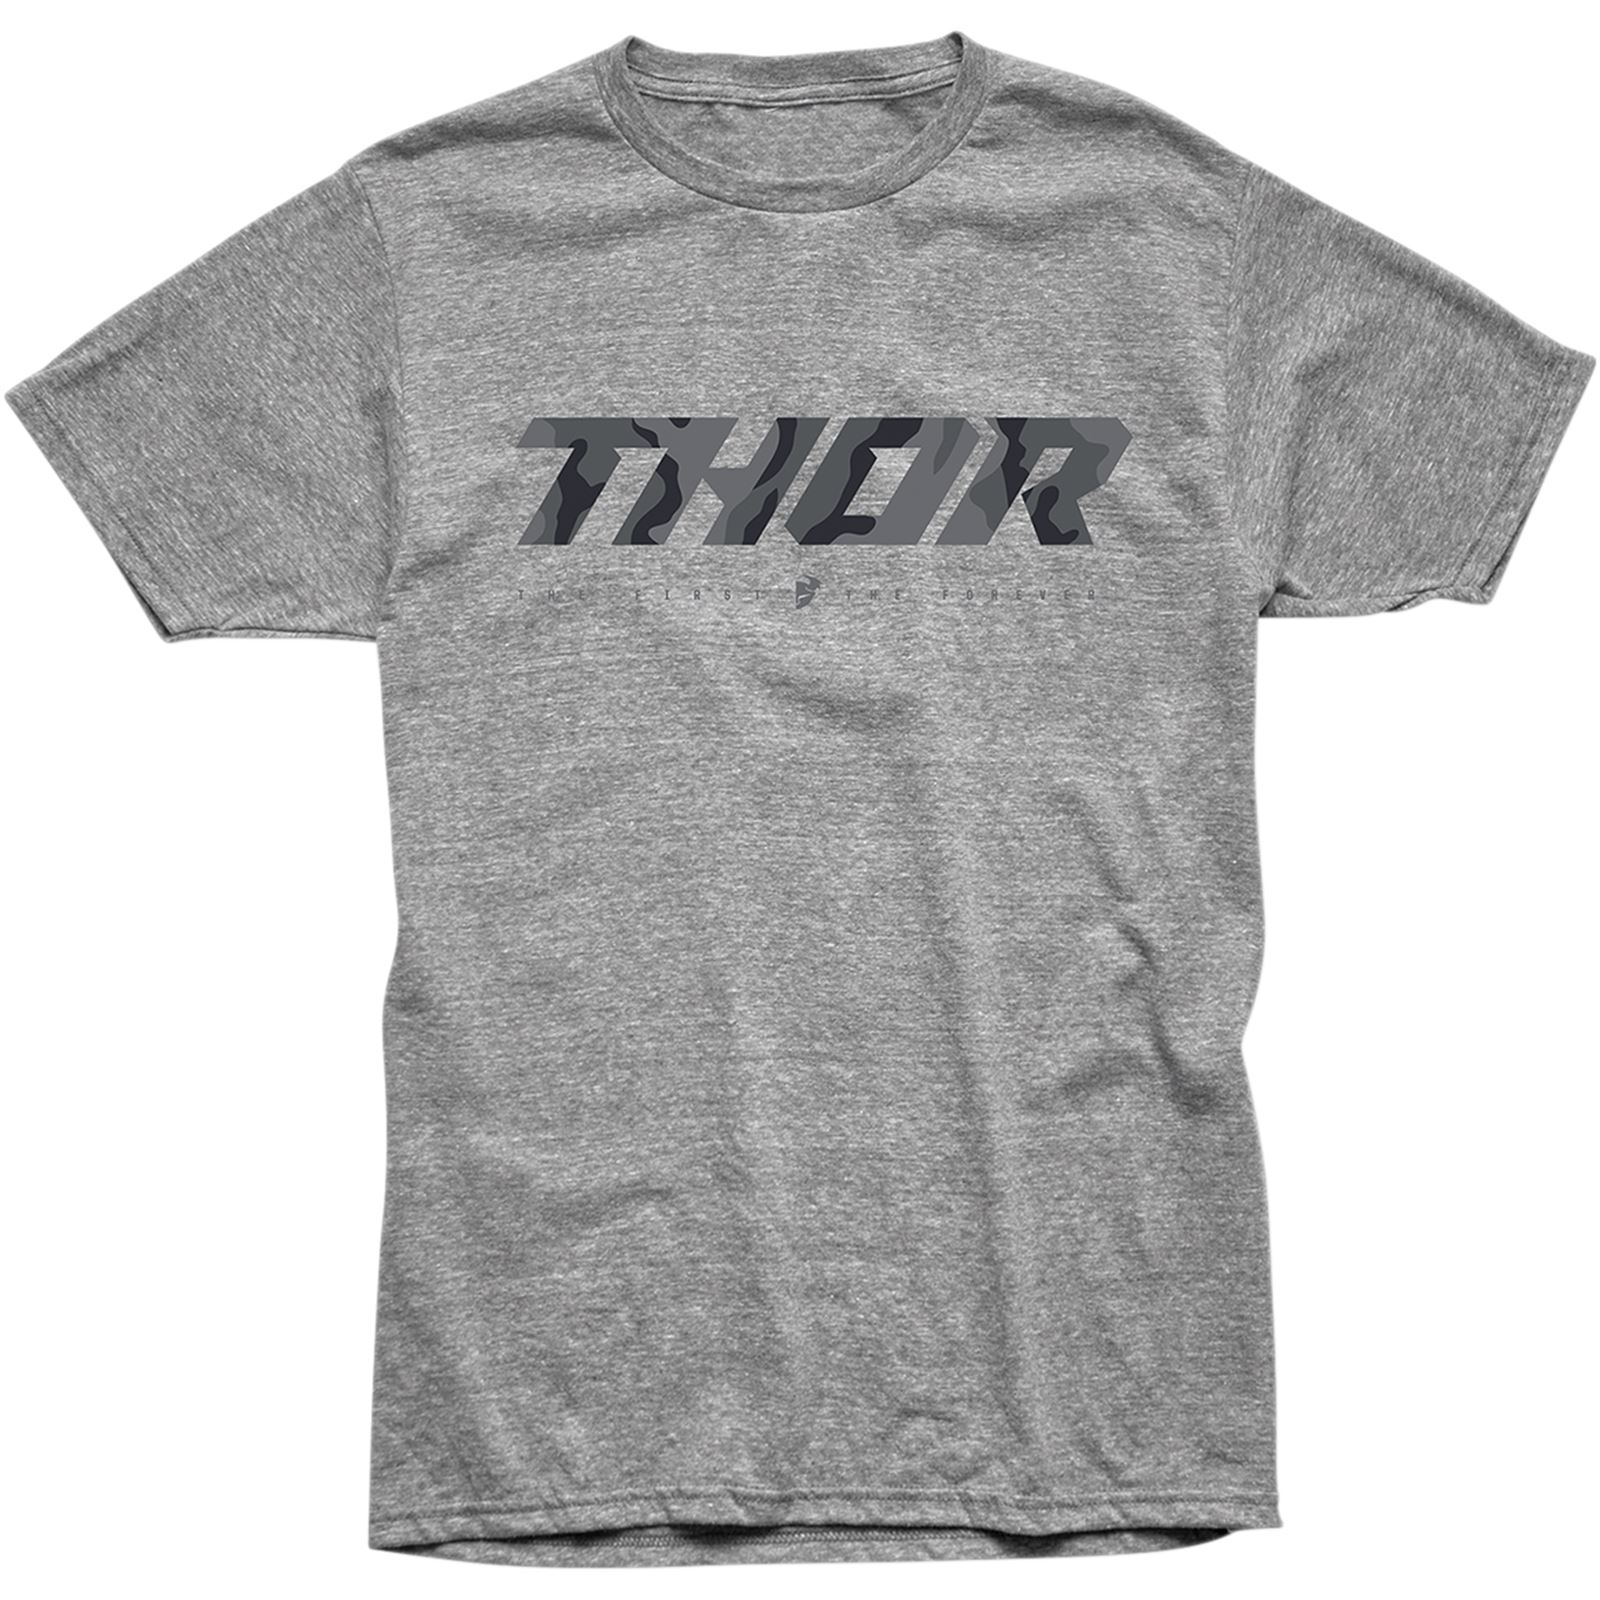 Thor Loud 2 Tee Shirt - Gray/Camo - 3X-Large